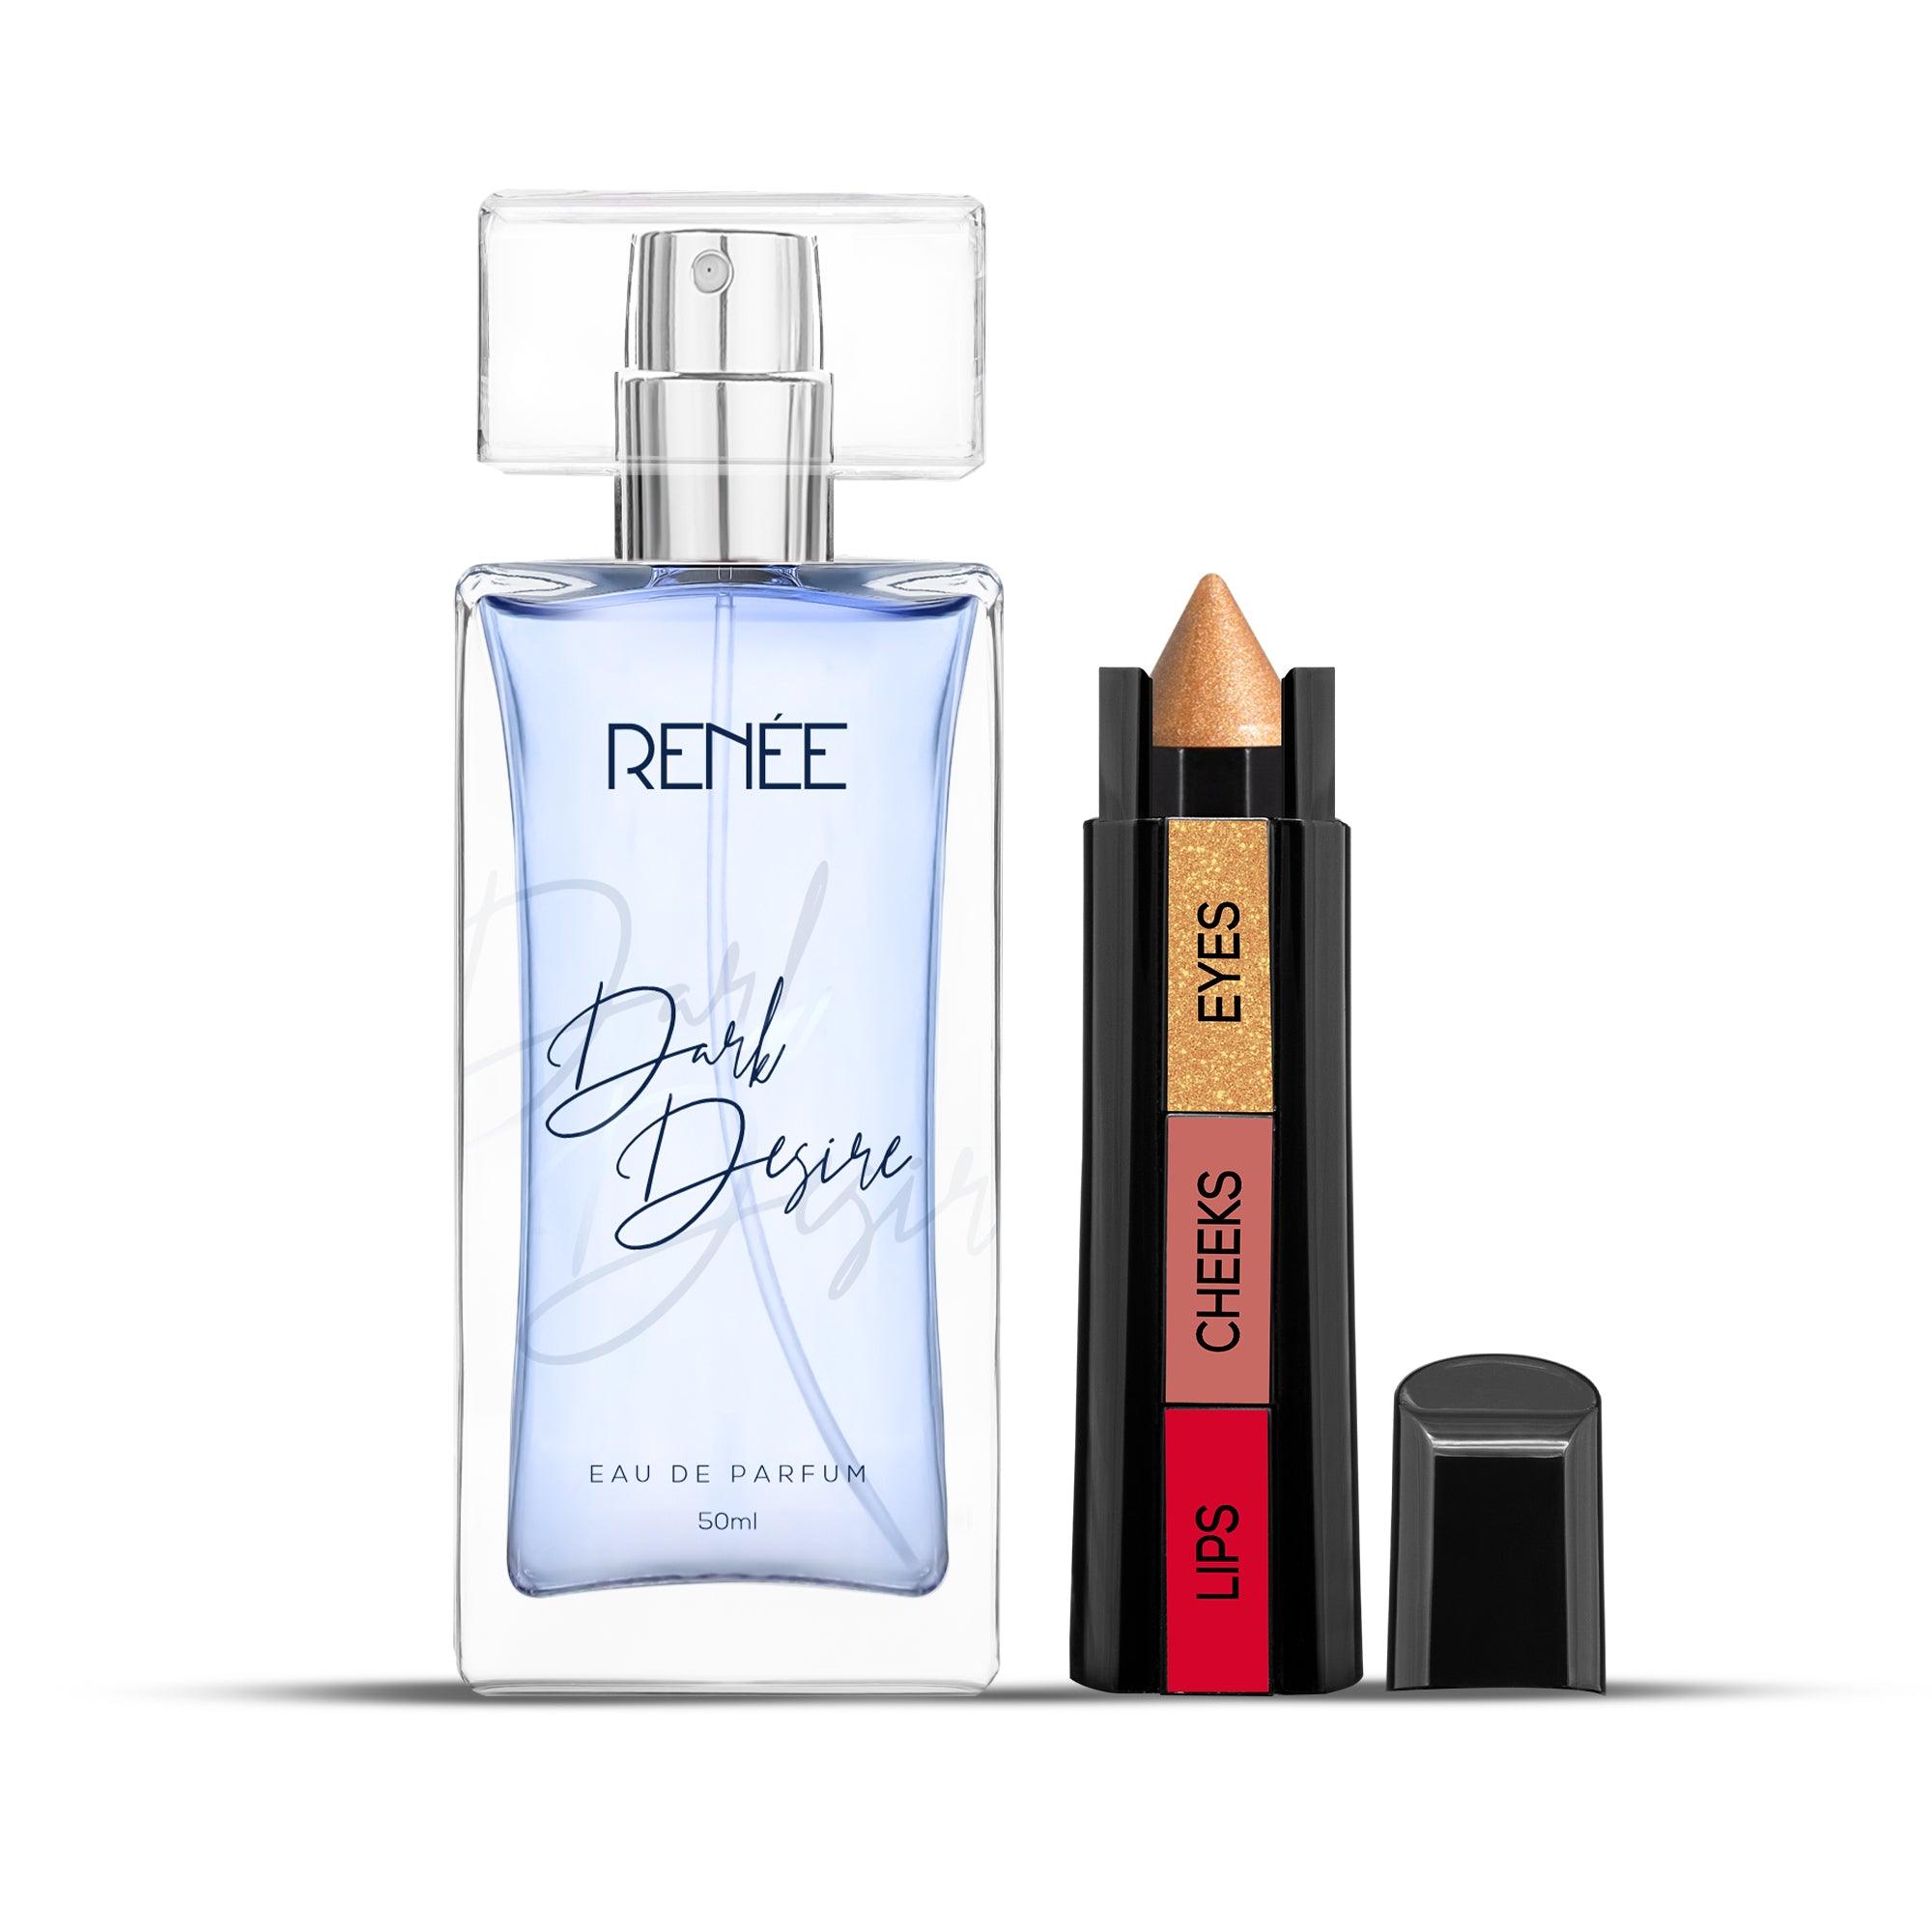 RENEE Eau De Parfum Premium Fragrance Set - Bloom & Dark Desire 8ml each